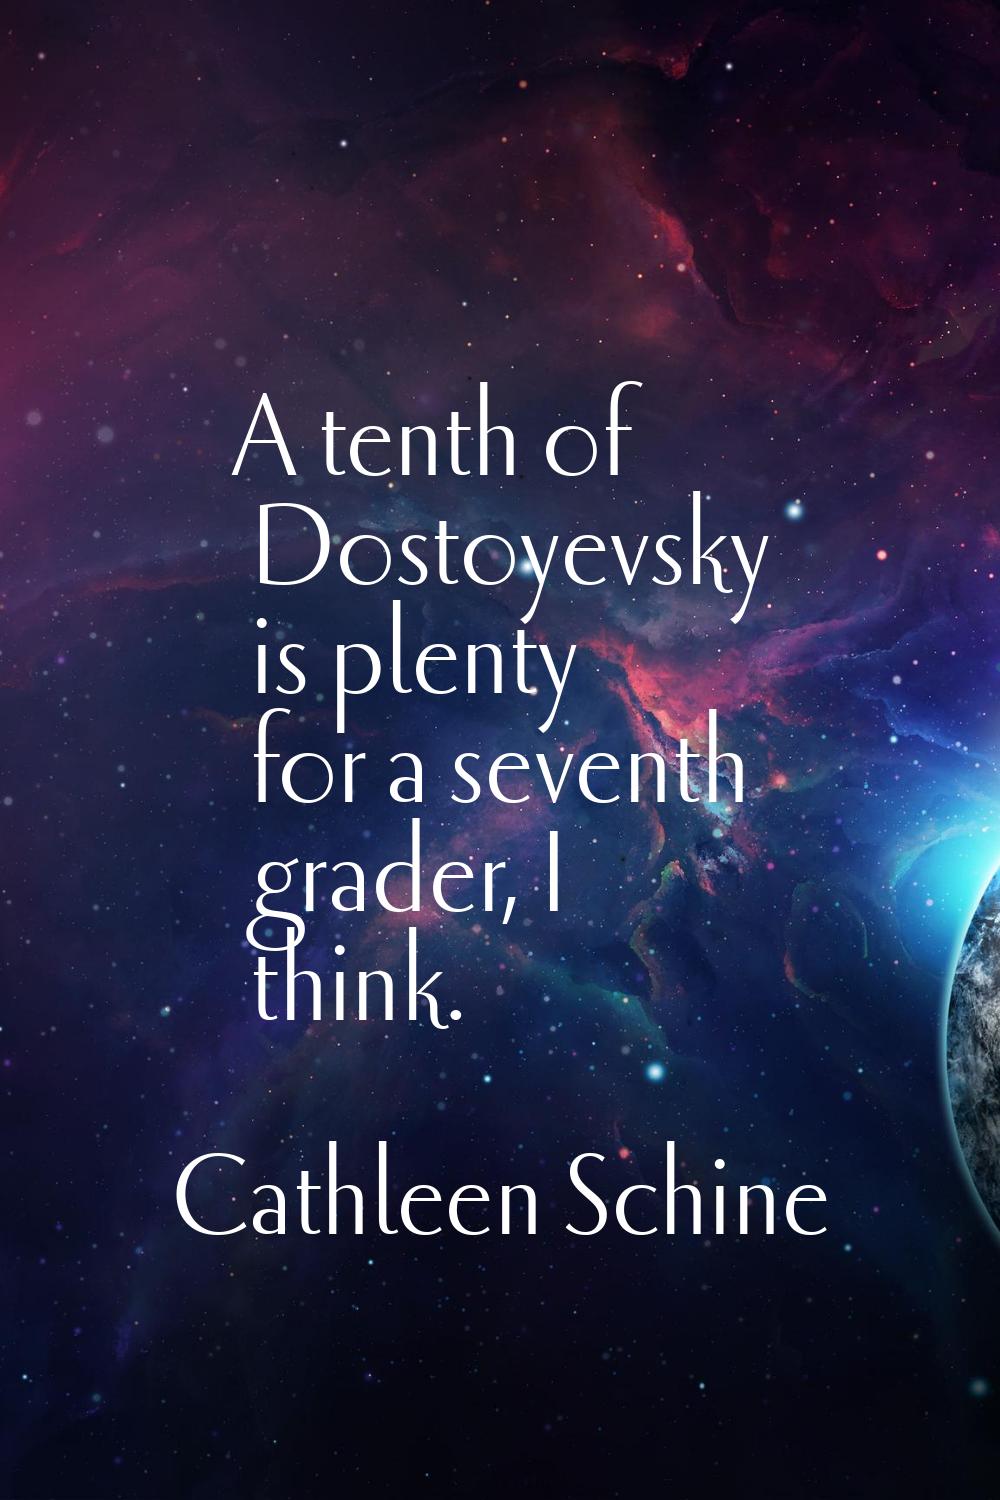 A tenth of Dostoyevsky is plenty for a seventh grader, I think.